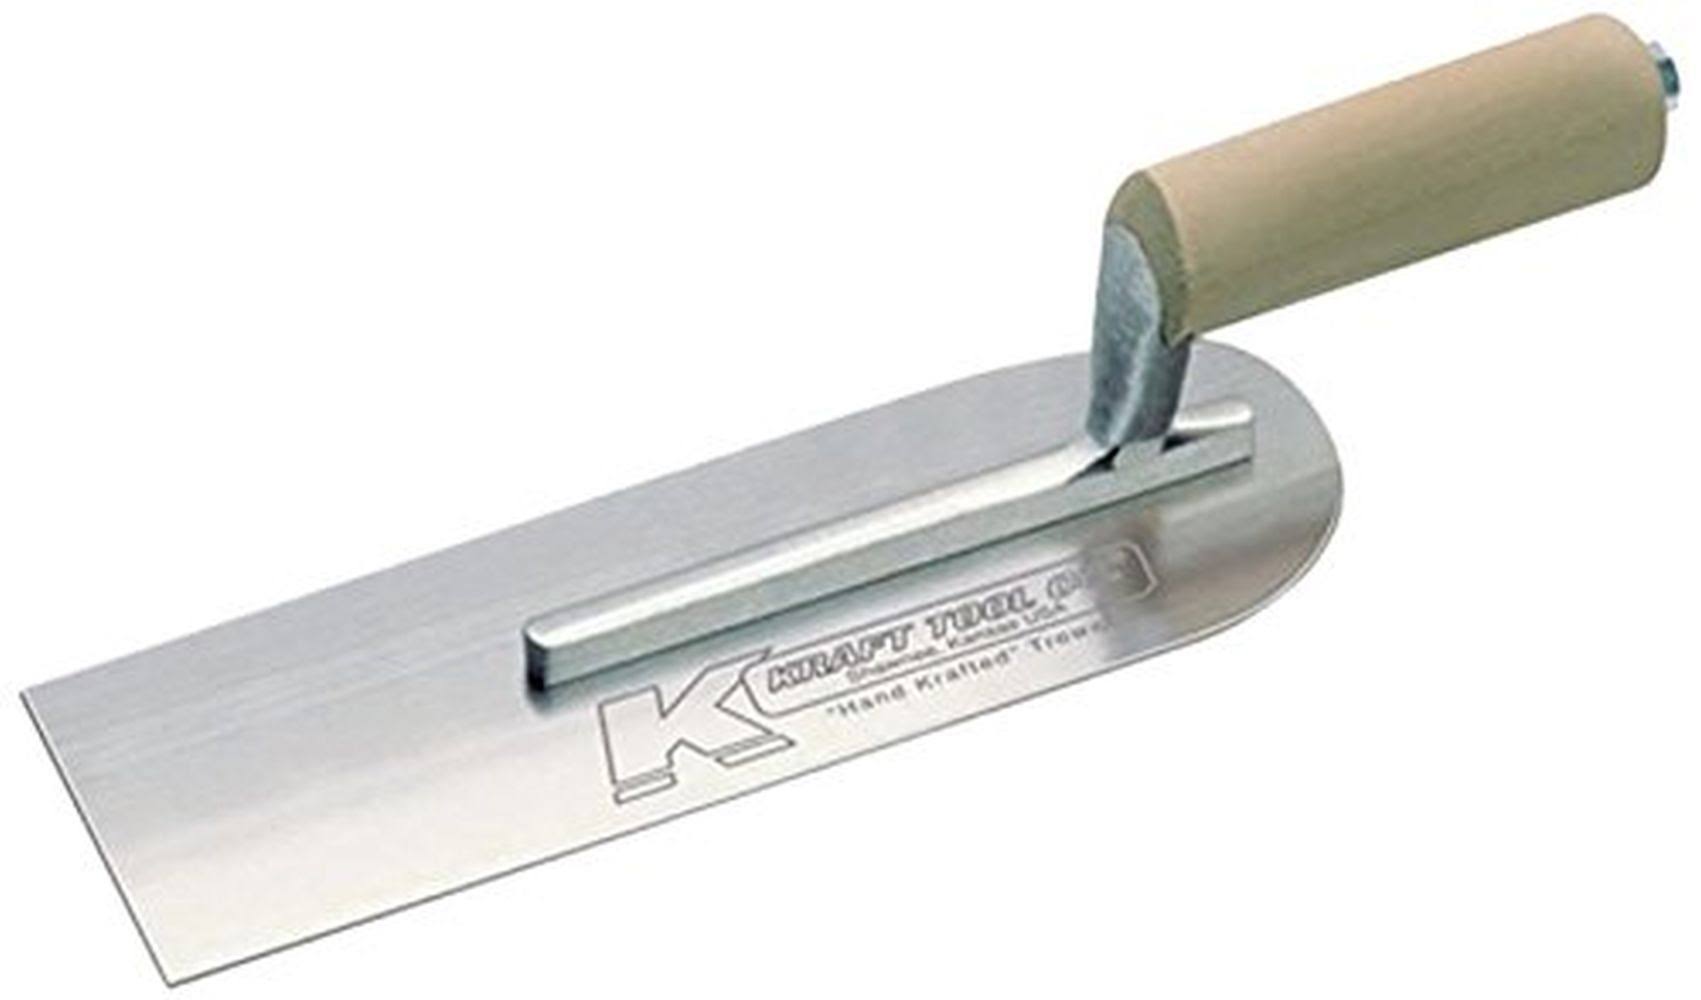 Kraft Tool PL501 Carbon Steel Pipe Trowel with Straight Wood Handle, 10-1/2 x 3"